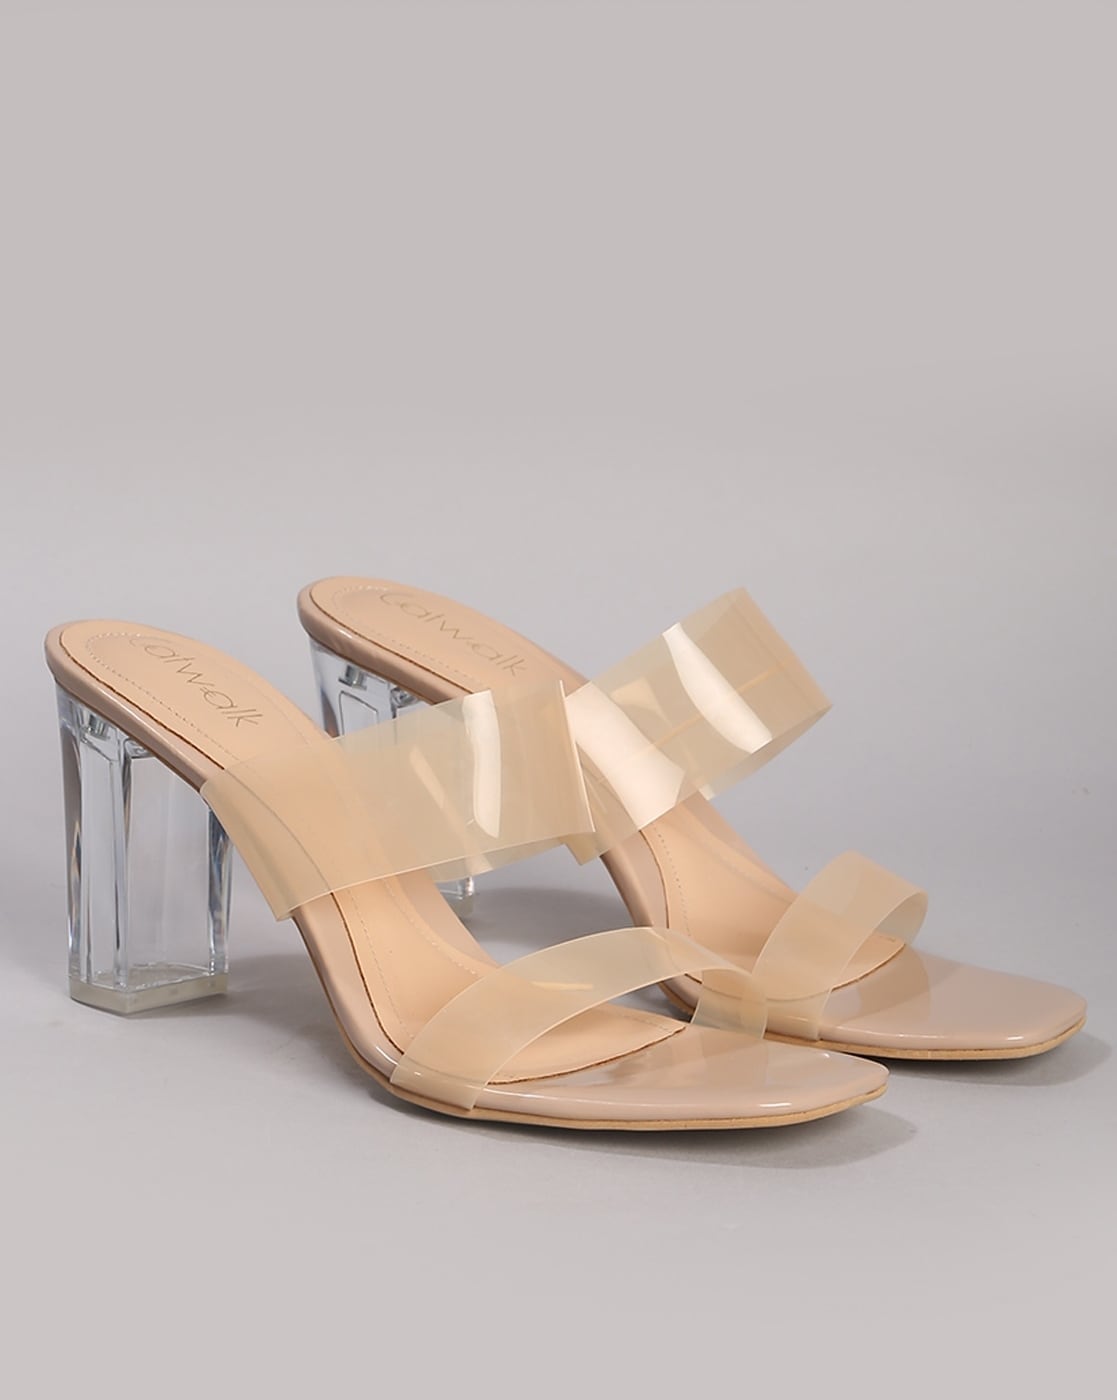 Women Catwalk Show Platform High Heels Pumps Ankle Strap Square Toe Party  Shoes | eBay